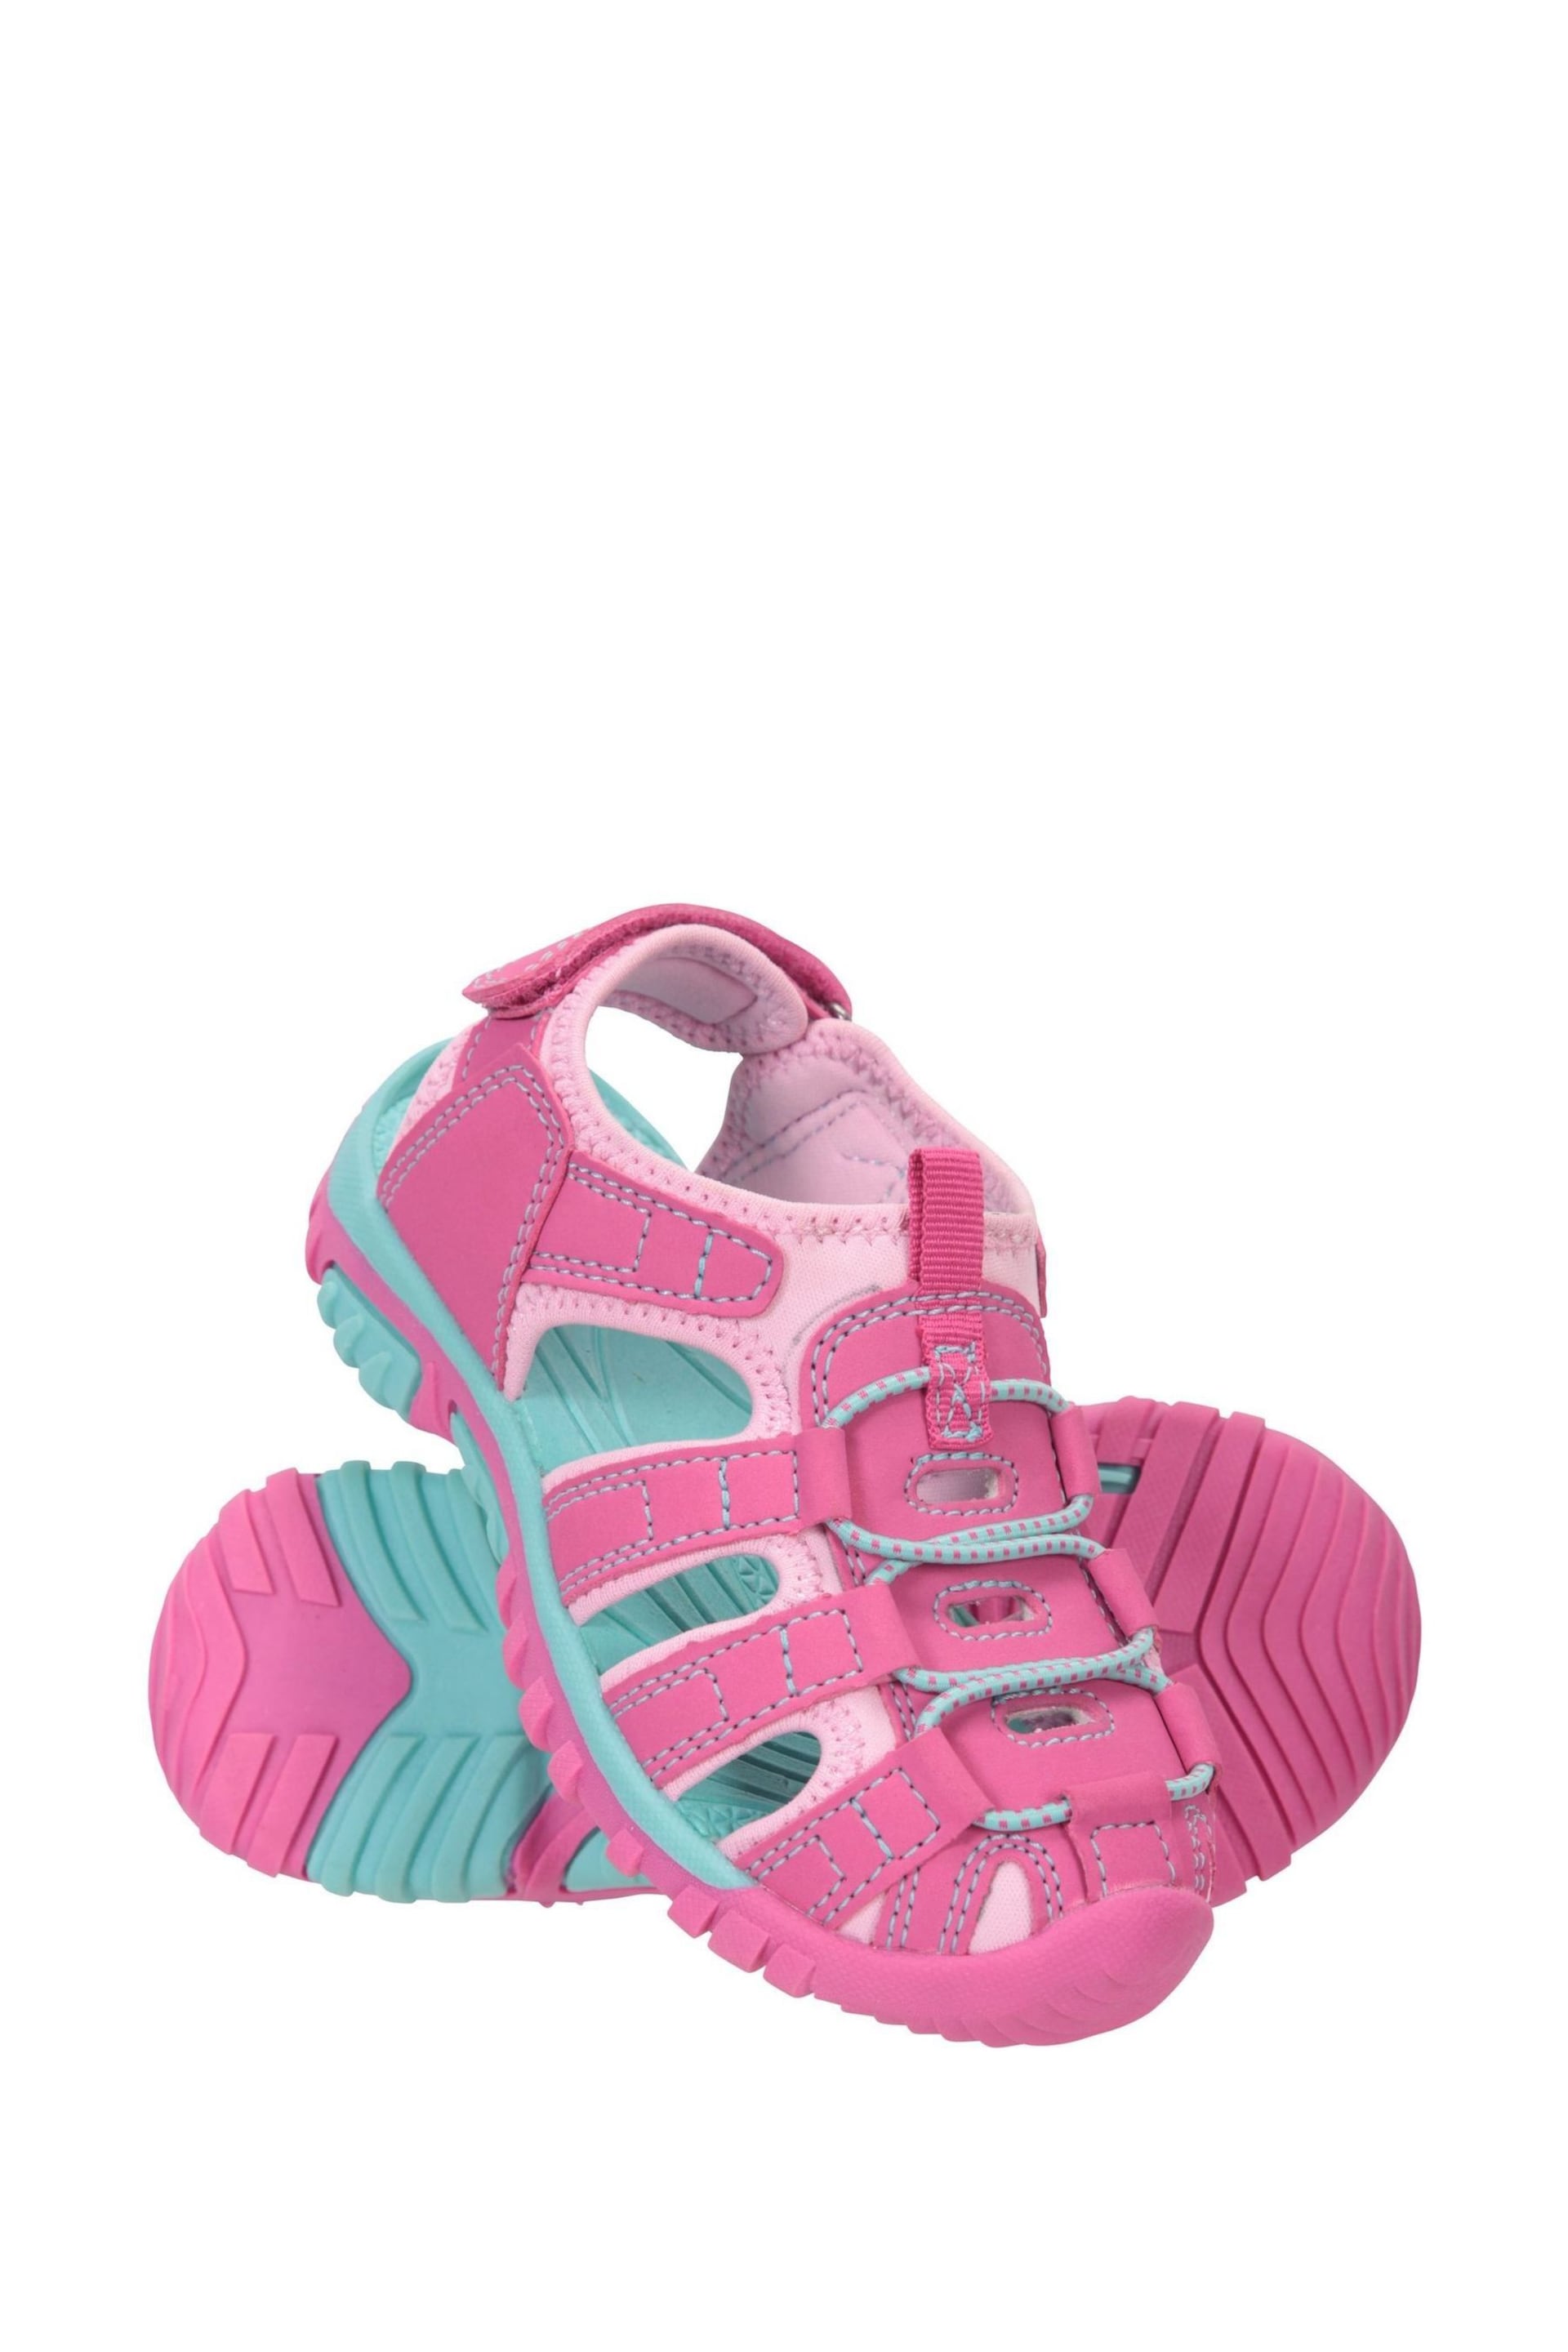 Mountain Warehouse Pink Bay Toddler Sandals - Image 2 of 5